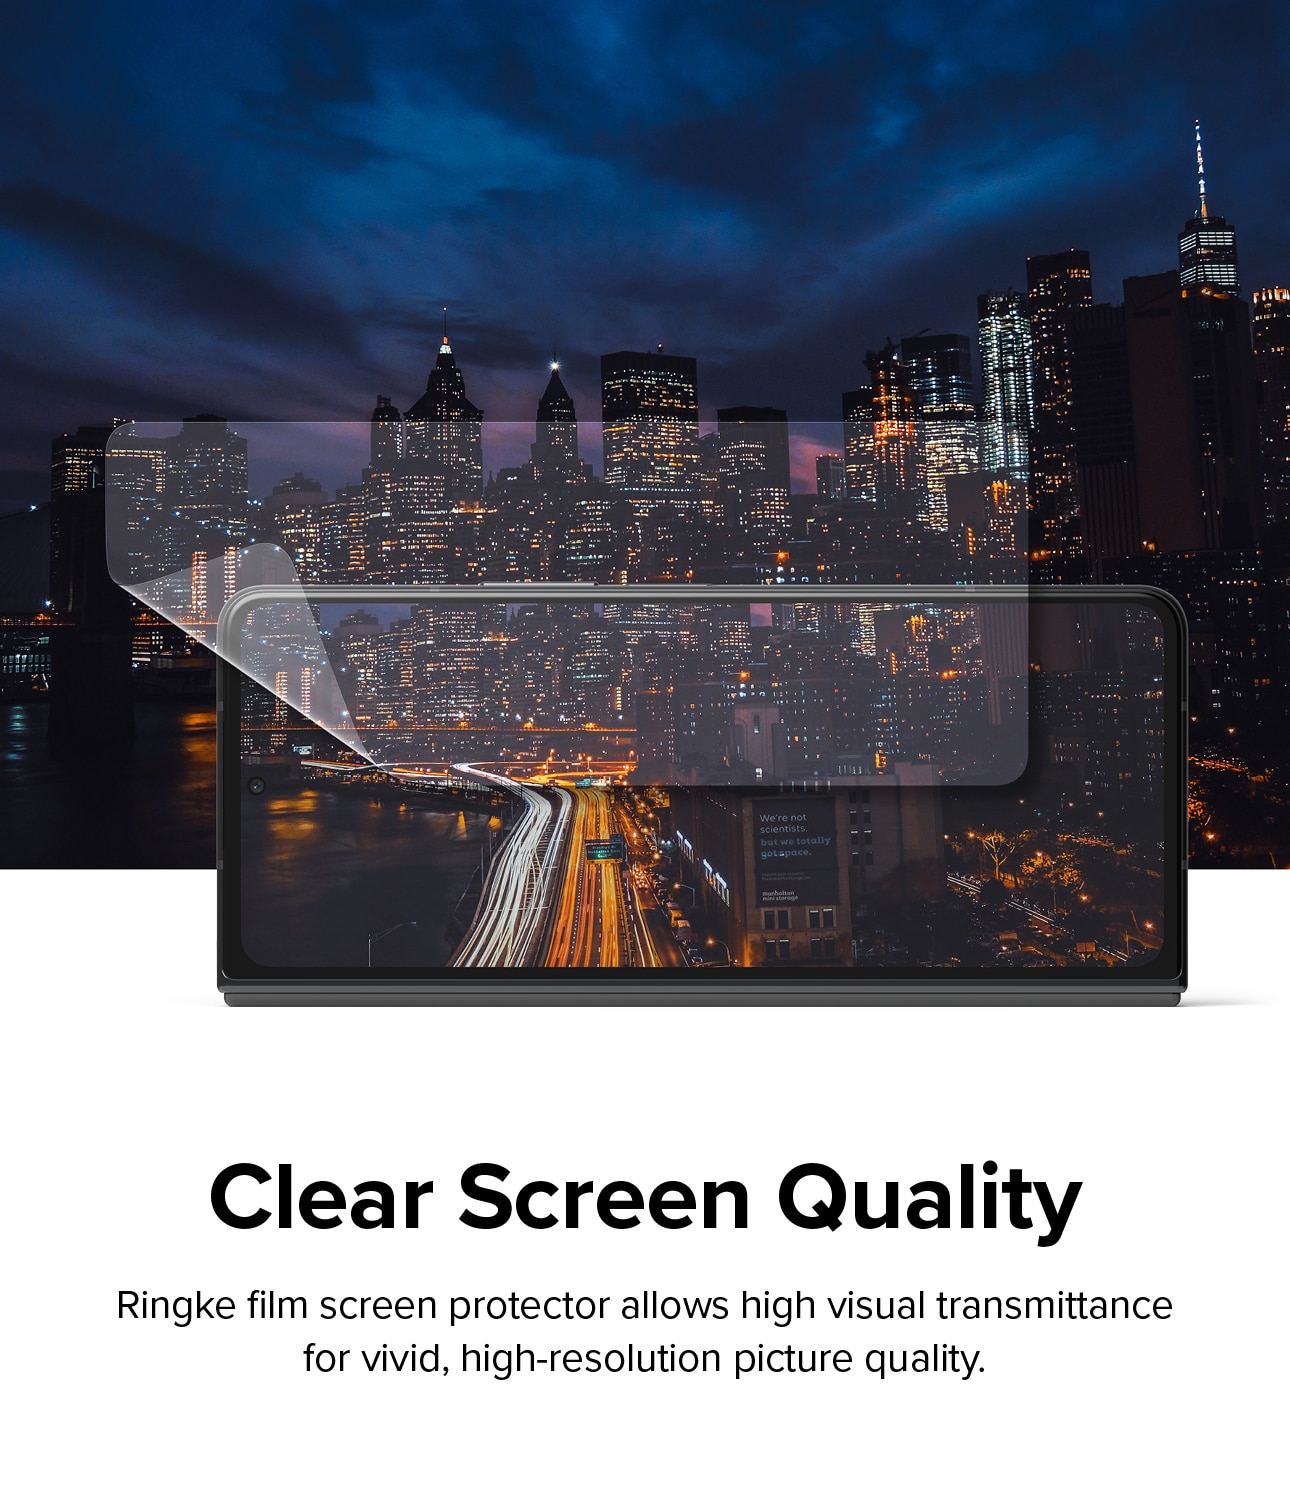 Samsung Galaxy Z Fold 4 ID Screen Protector